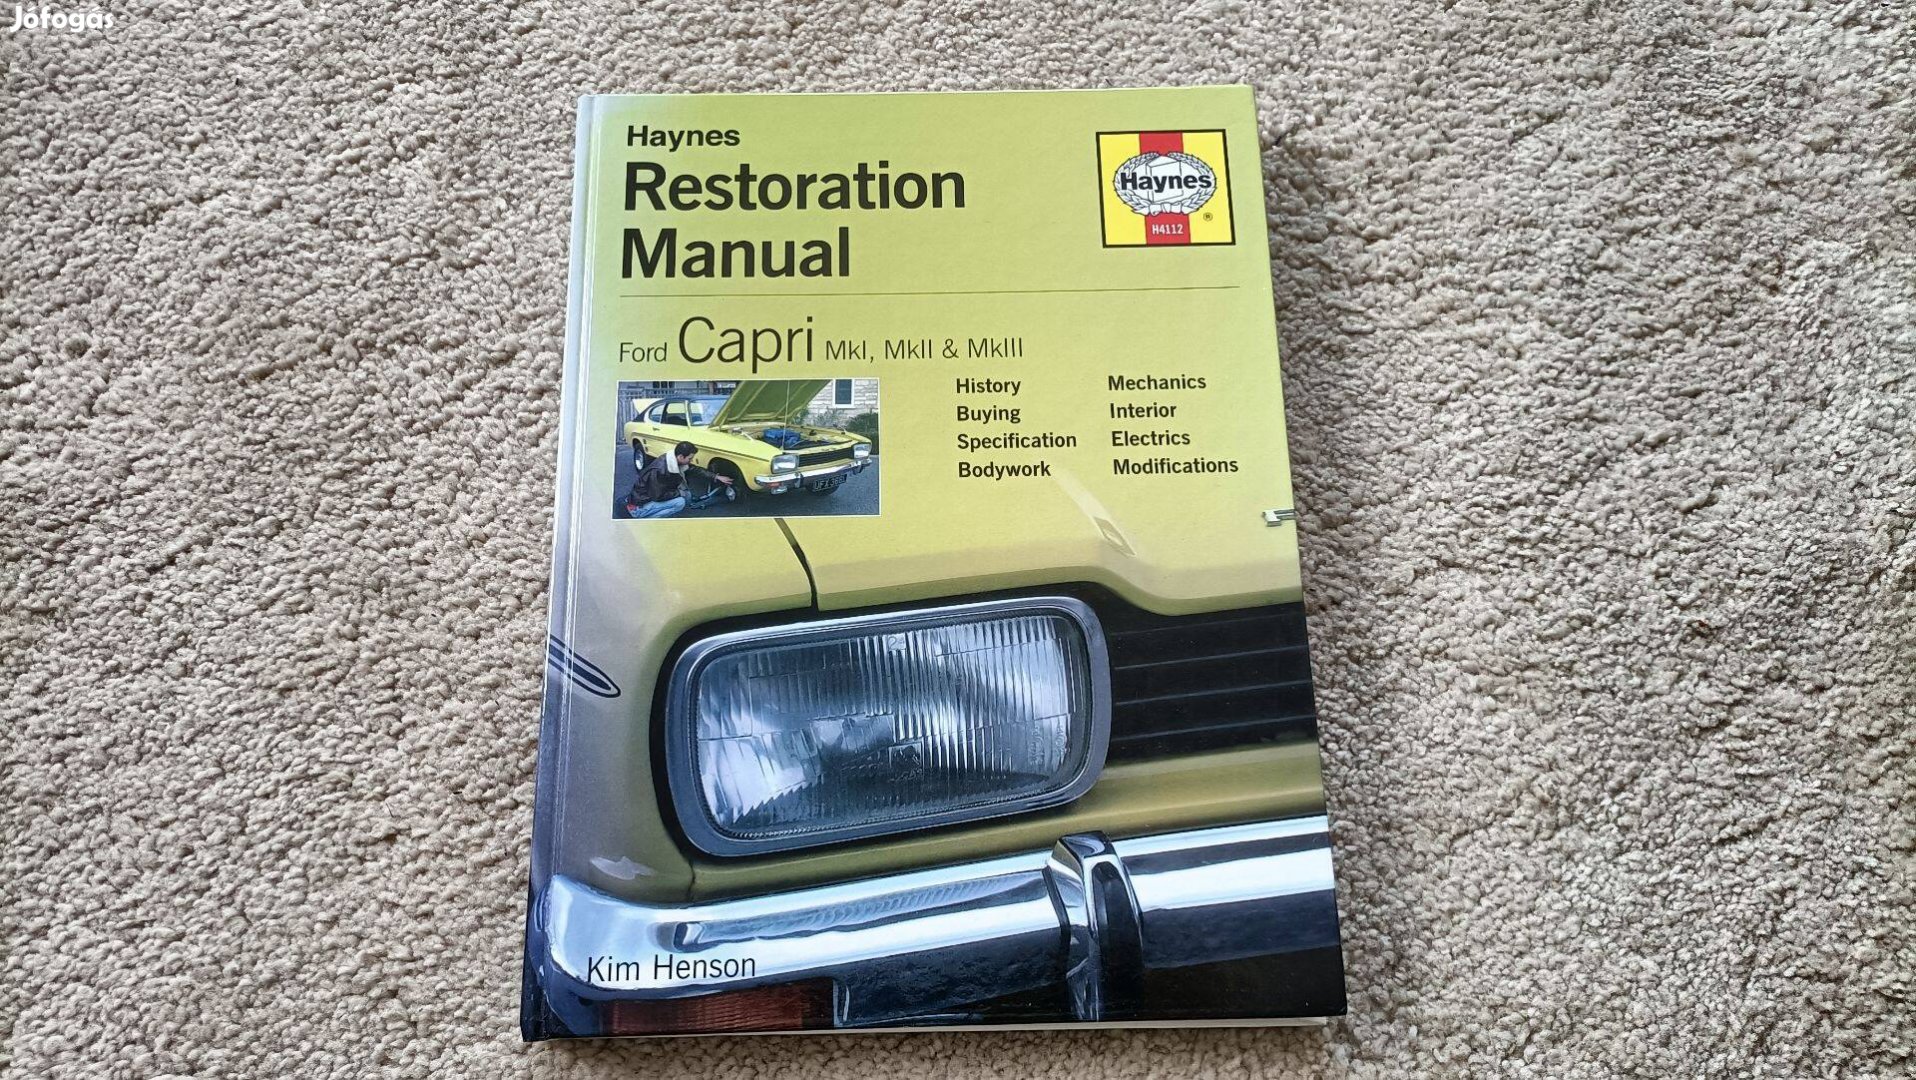 Ford Capri Restoration Manual, Haynes